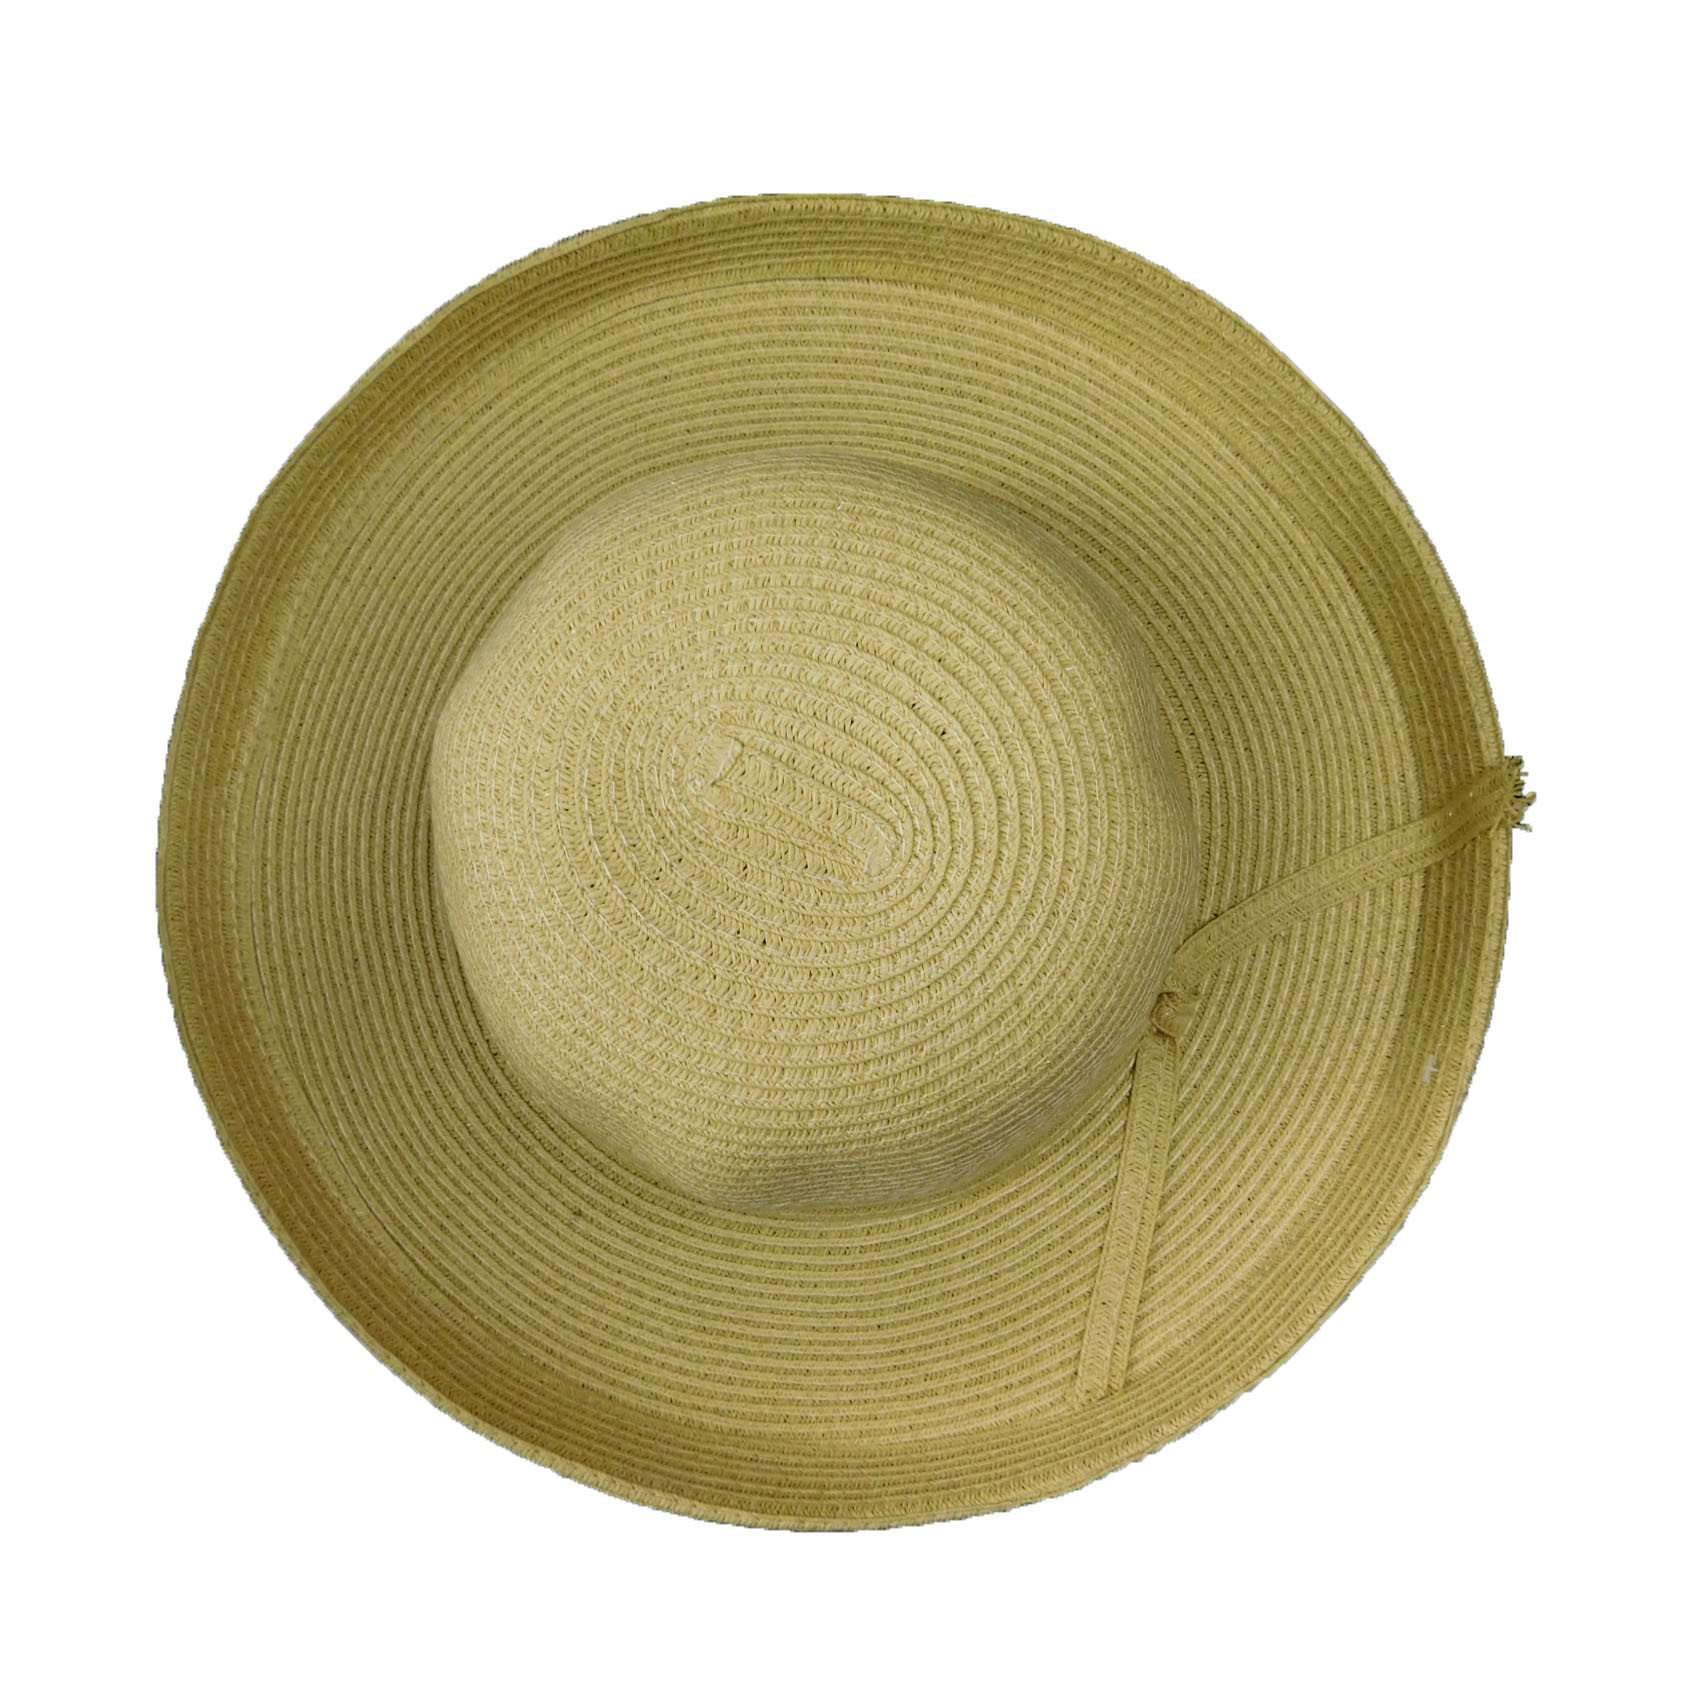 Medium Sewn Braid Kettle Brim - Jeanne Simmons Hats Kettle Brim Hat Jeanne Simmons WSPP591TN Tan  